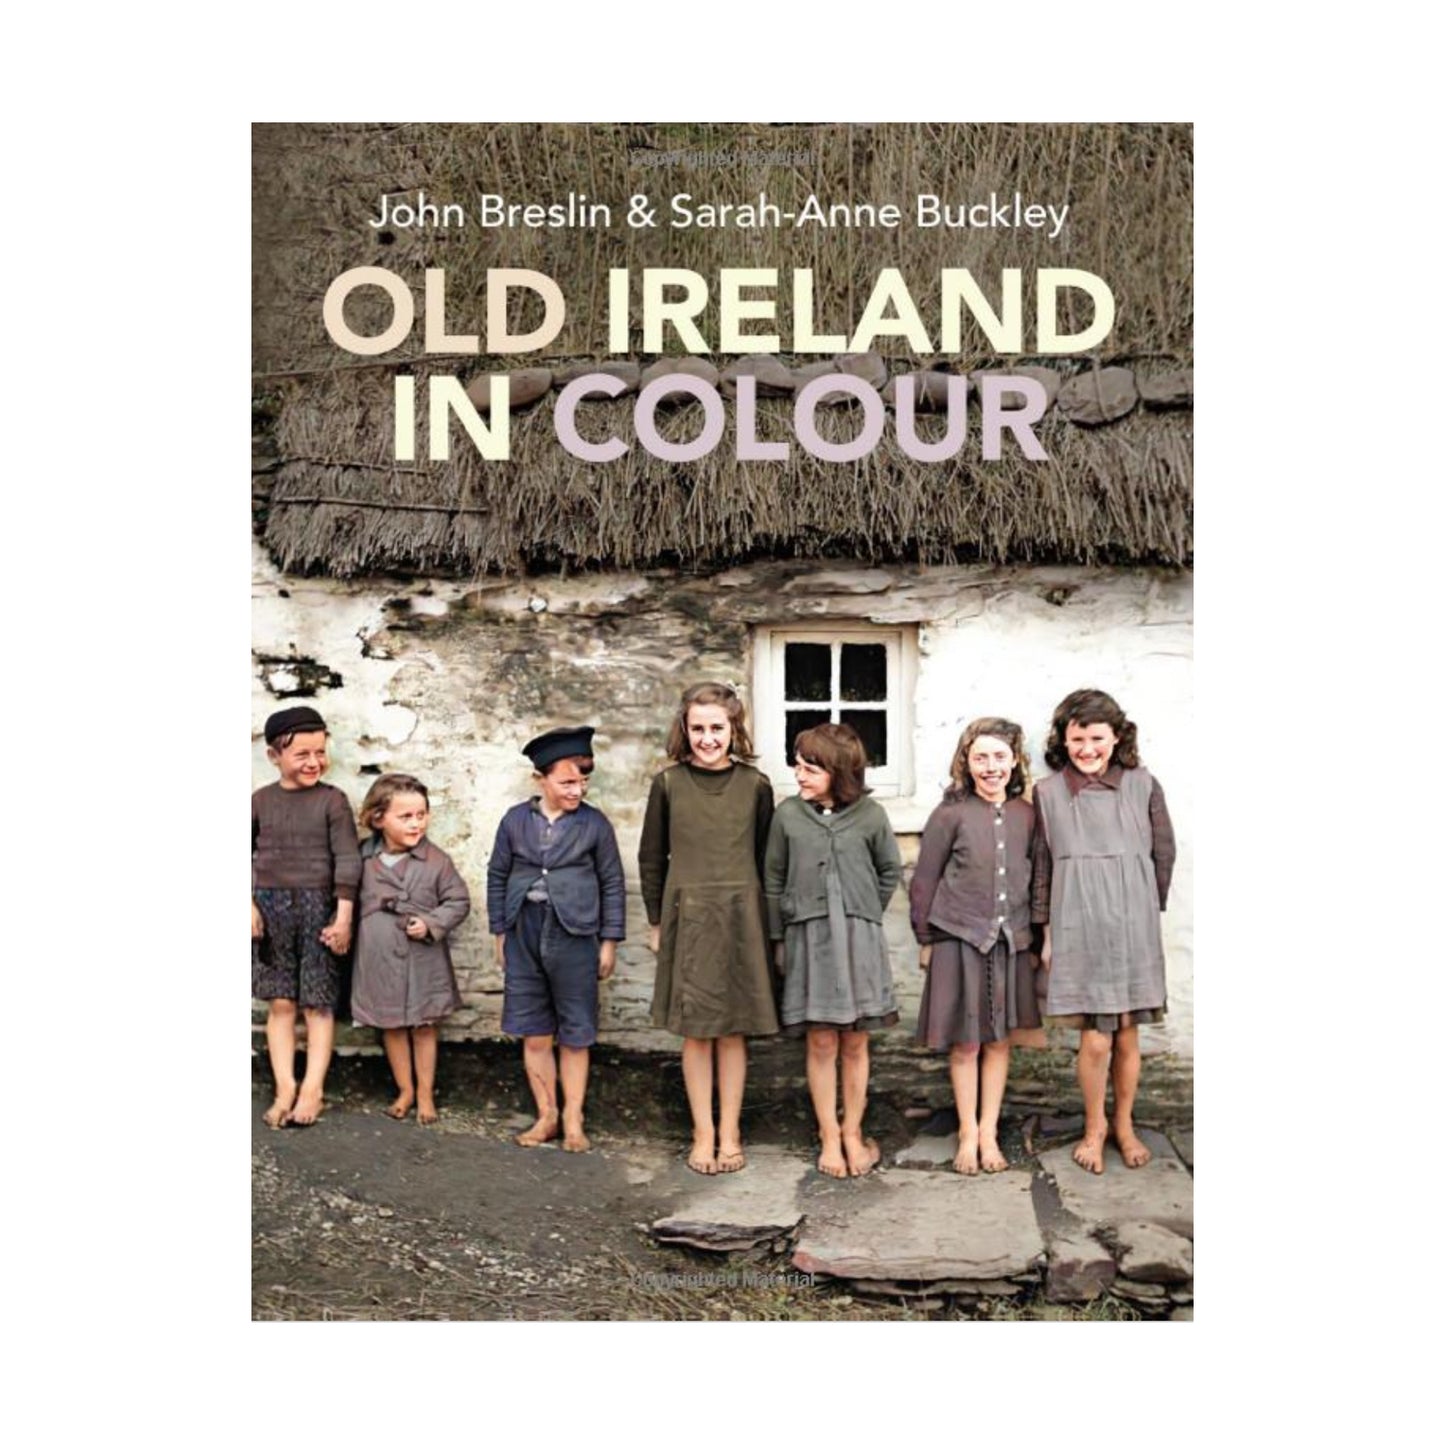 Old Ireland in Colour by John Breslin & Sarah-Anne Buckley